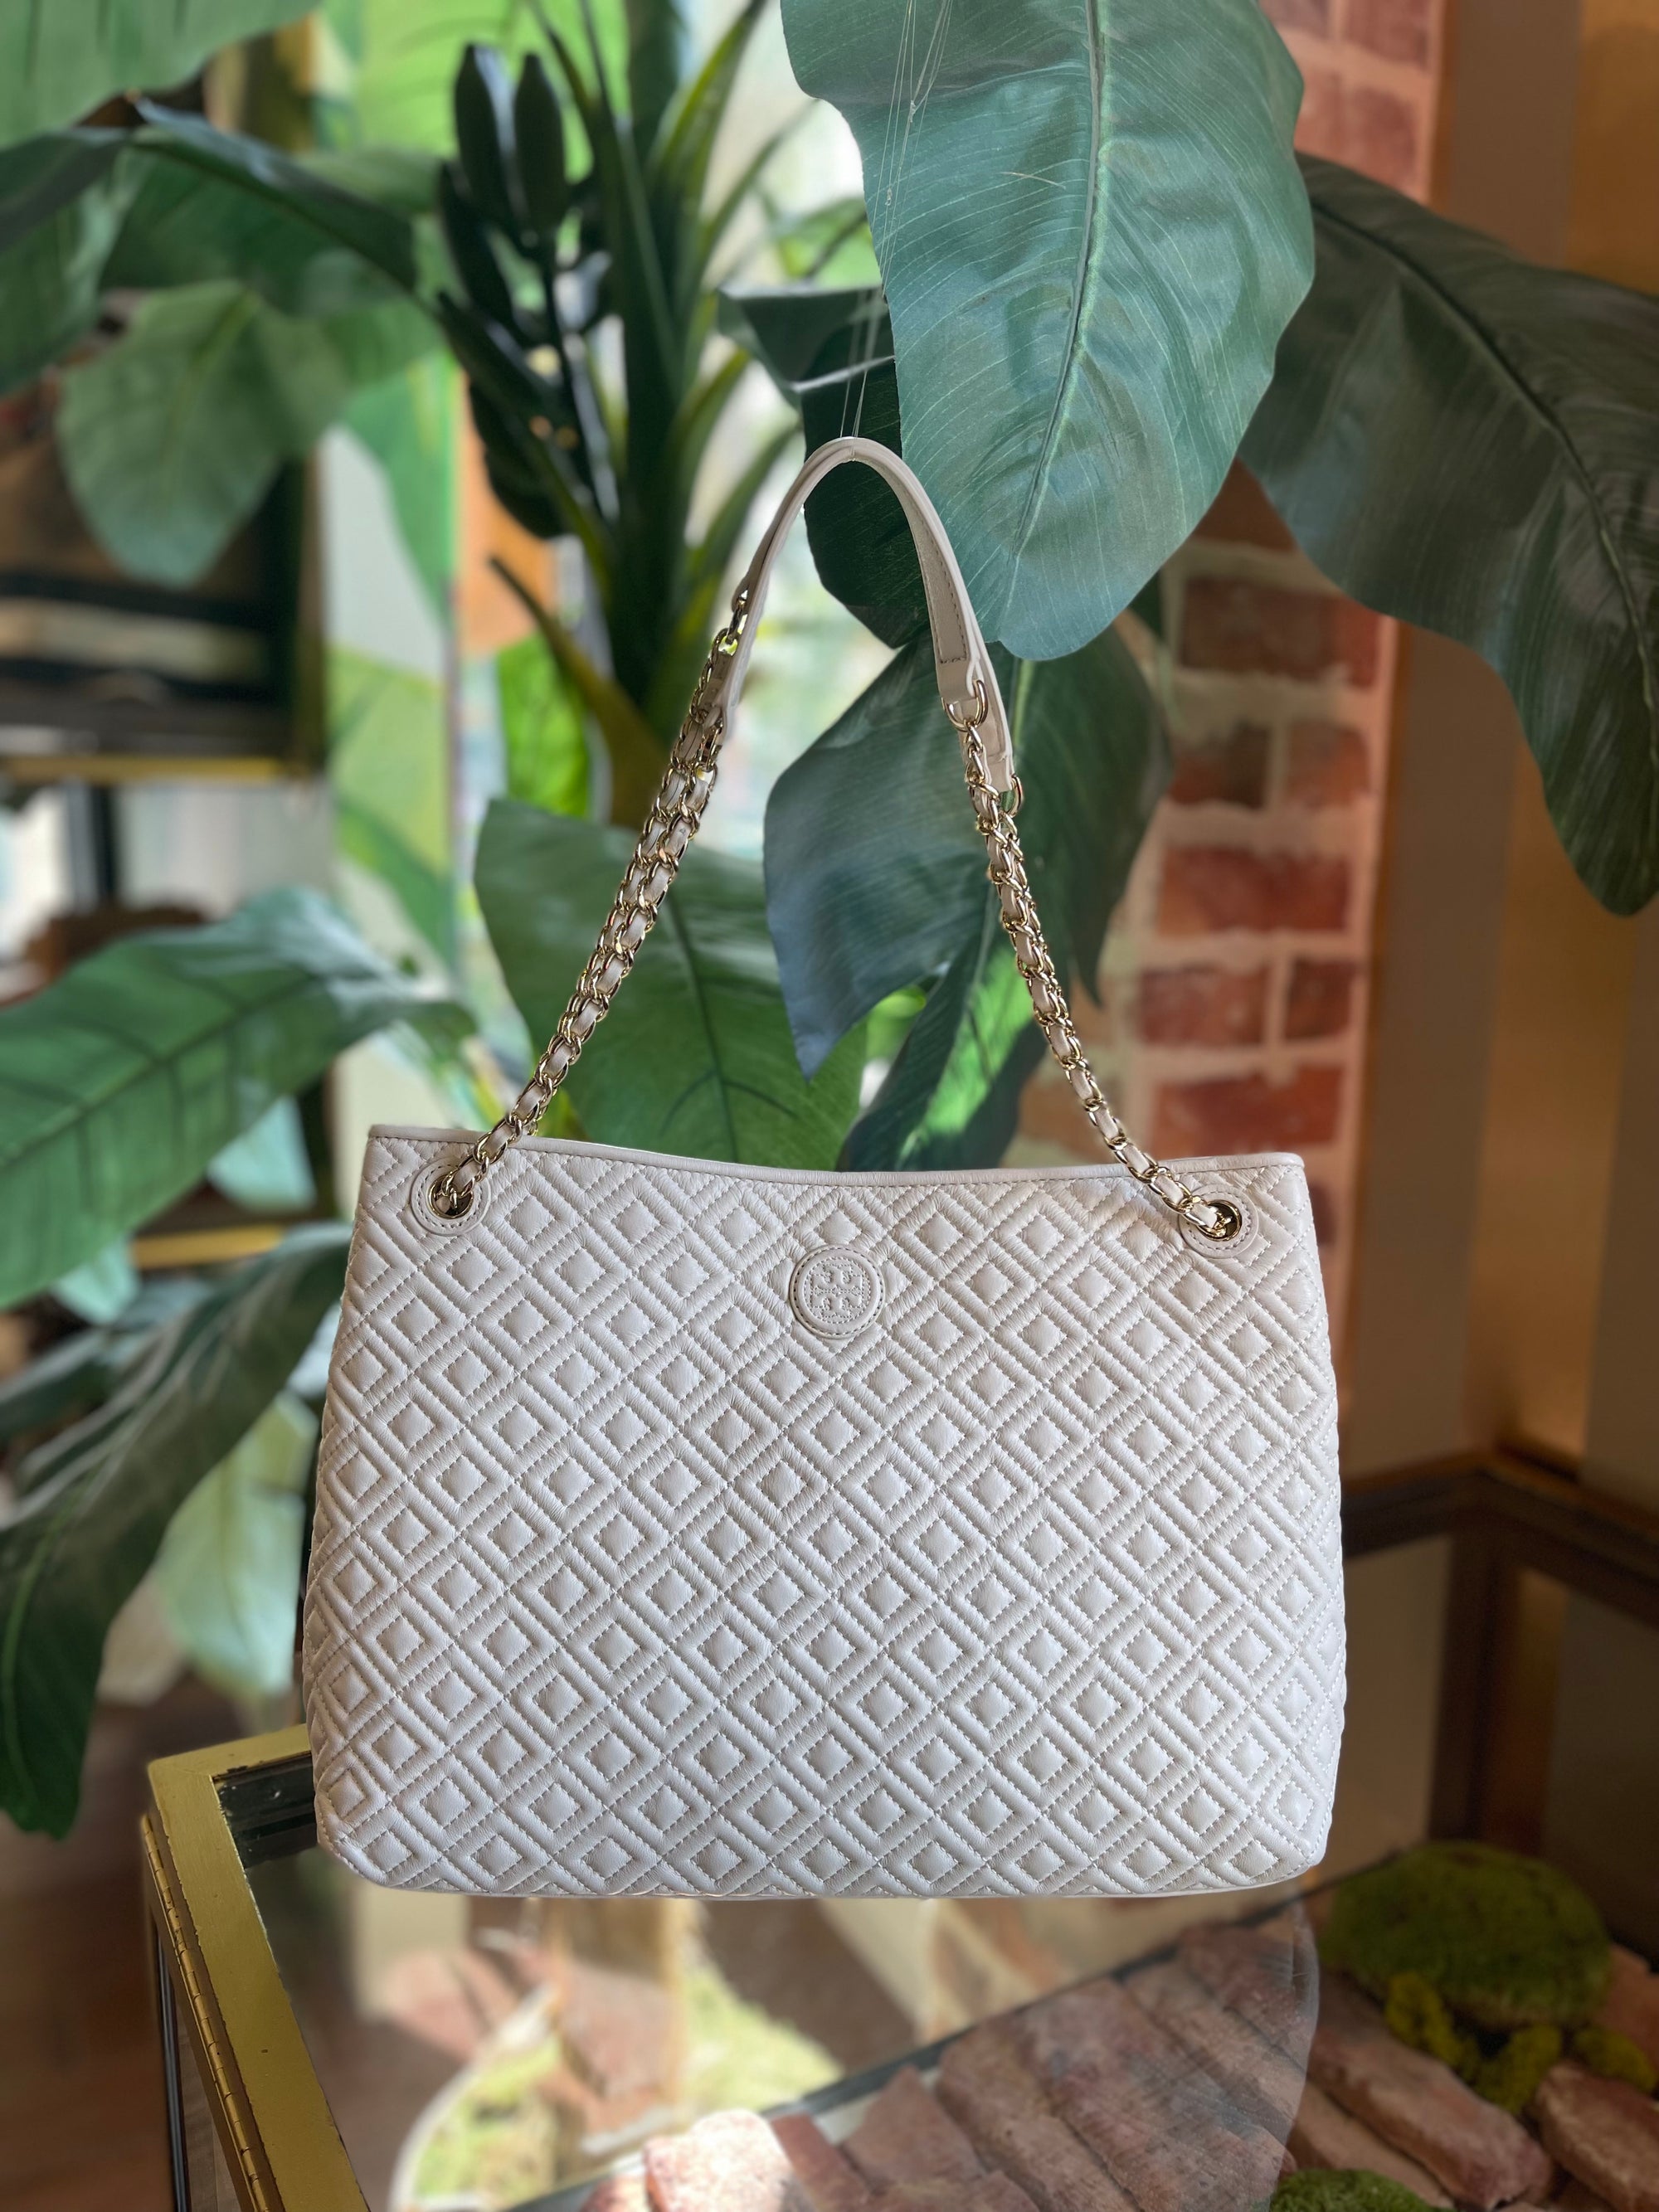 Under $500 Tagged Type_Handbags - The Purse Ladies